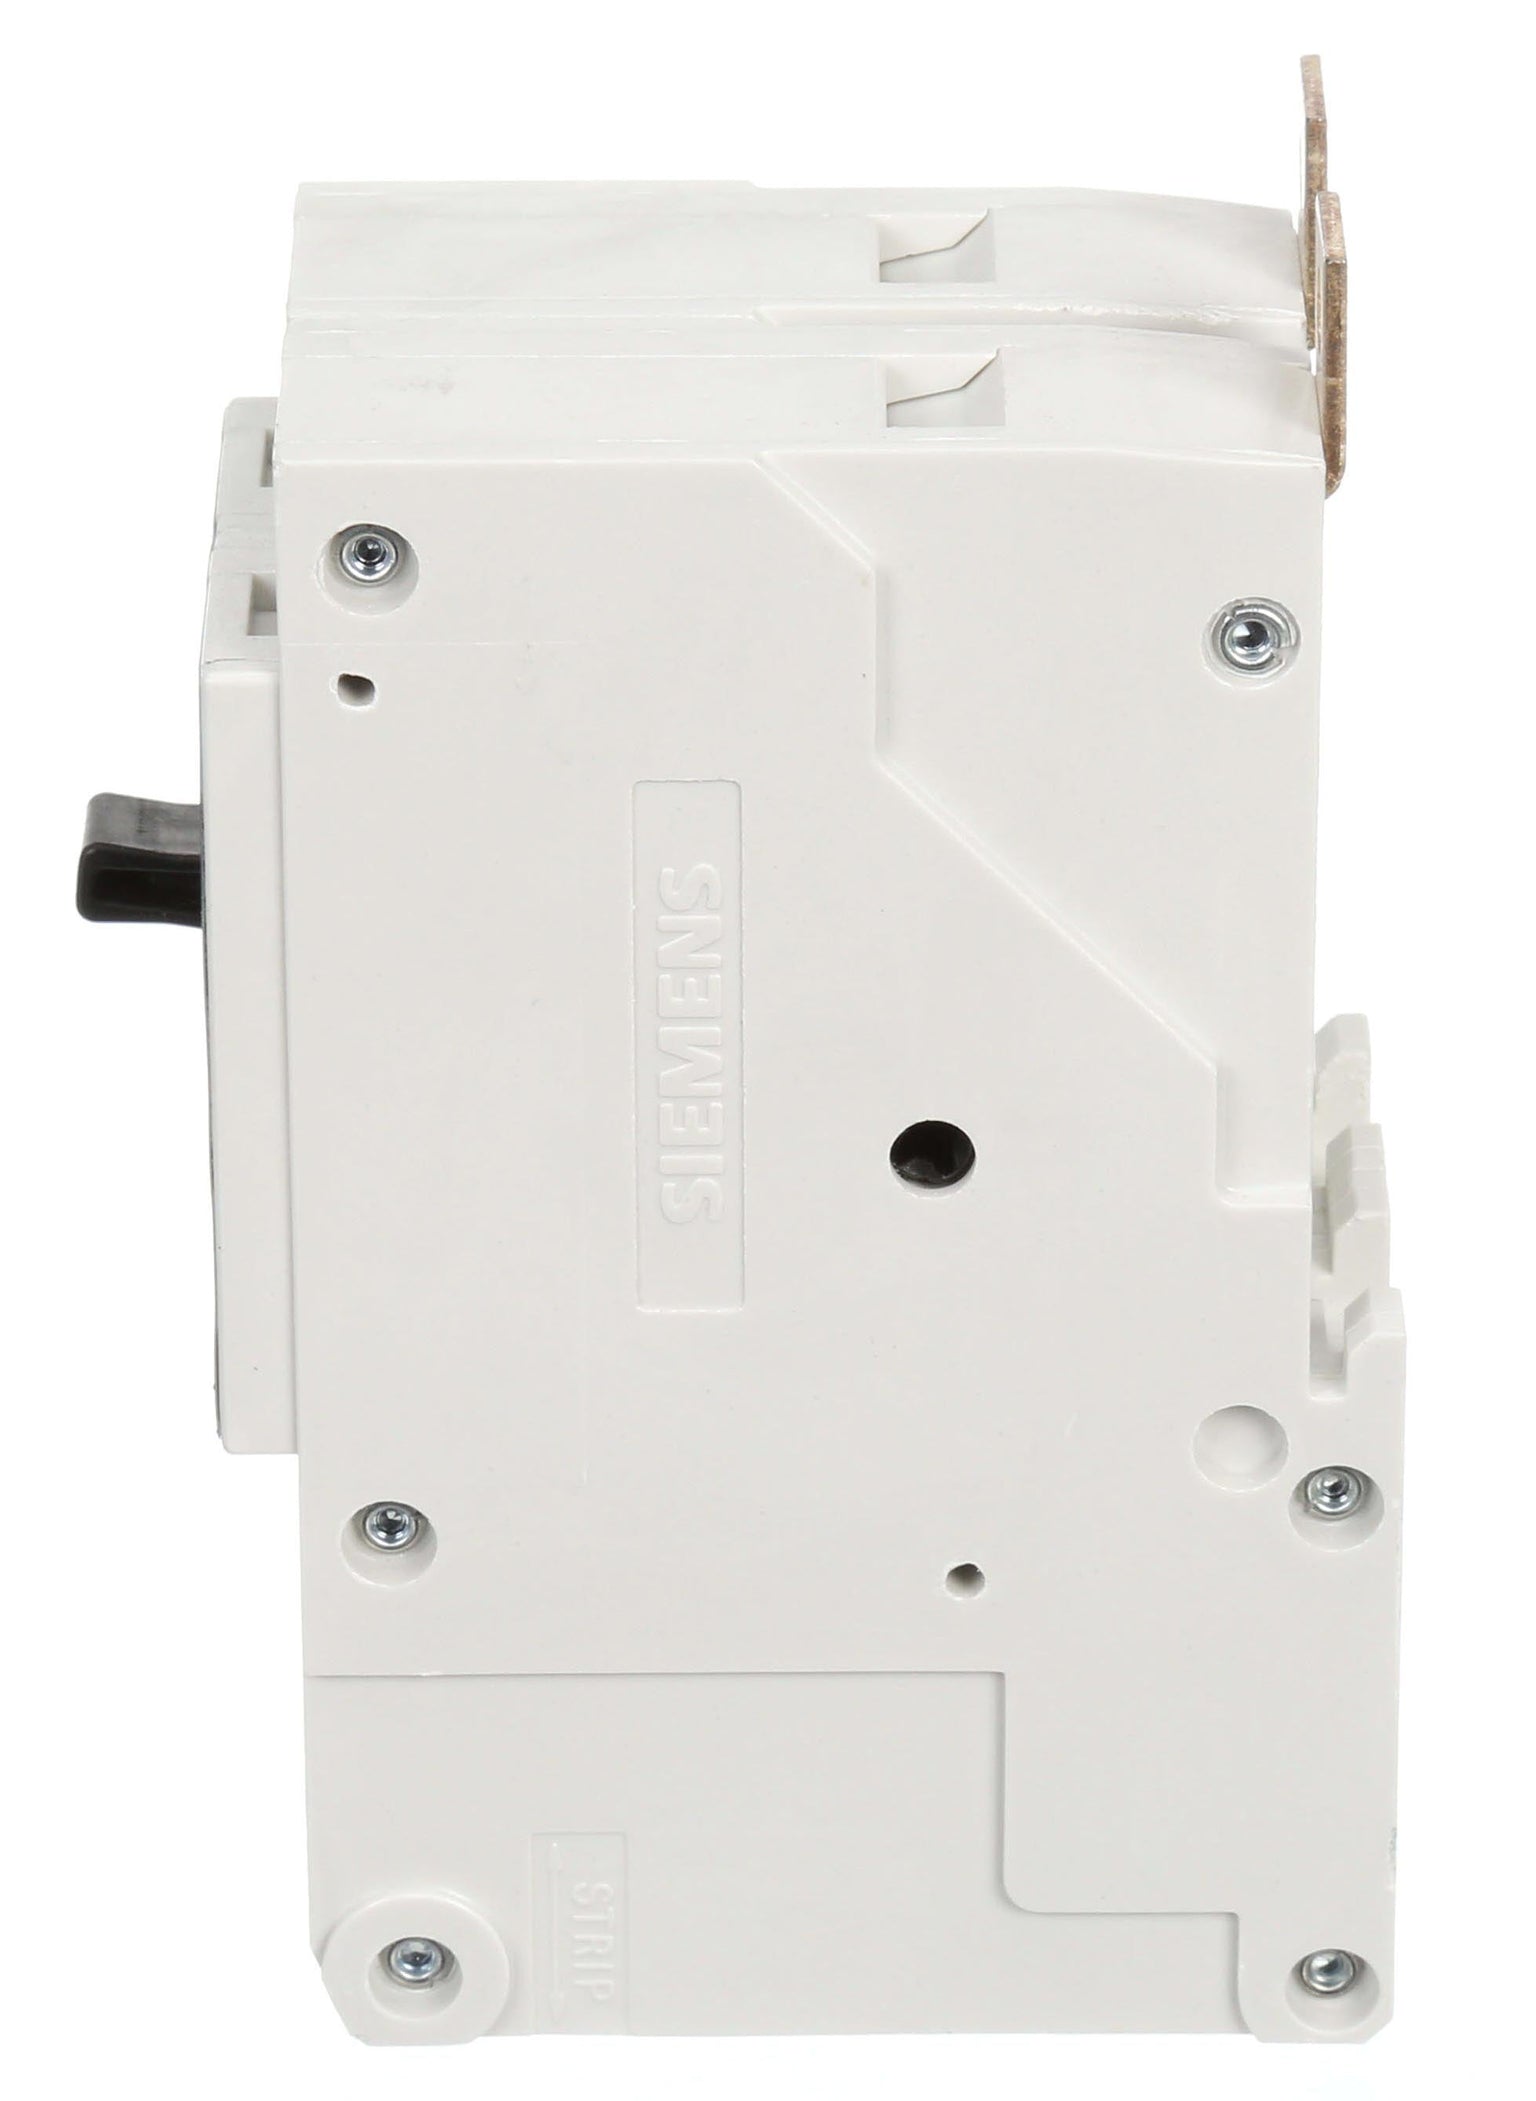 NGB2B020B - Siemens - Molded Case Circuit Breaker